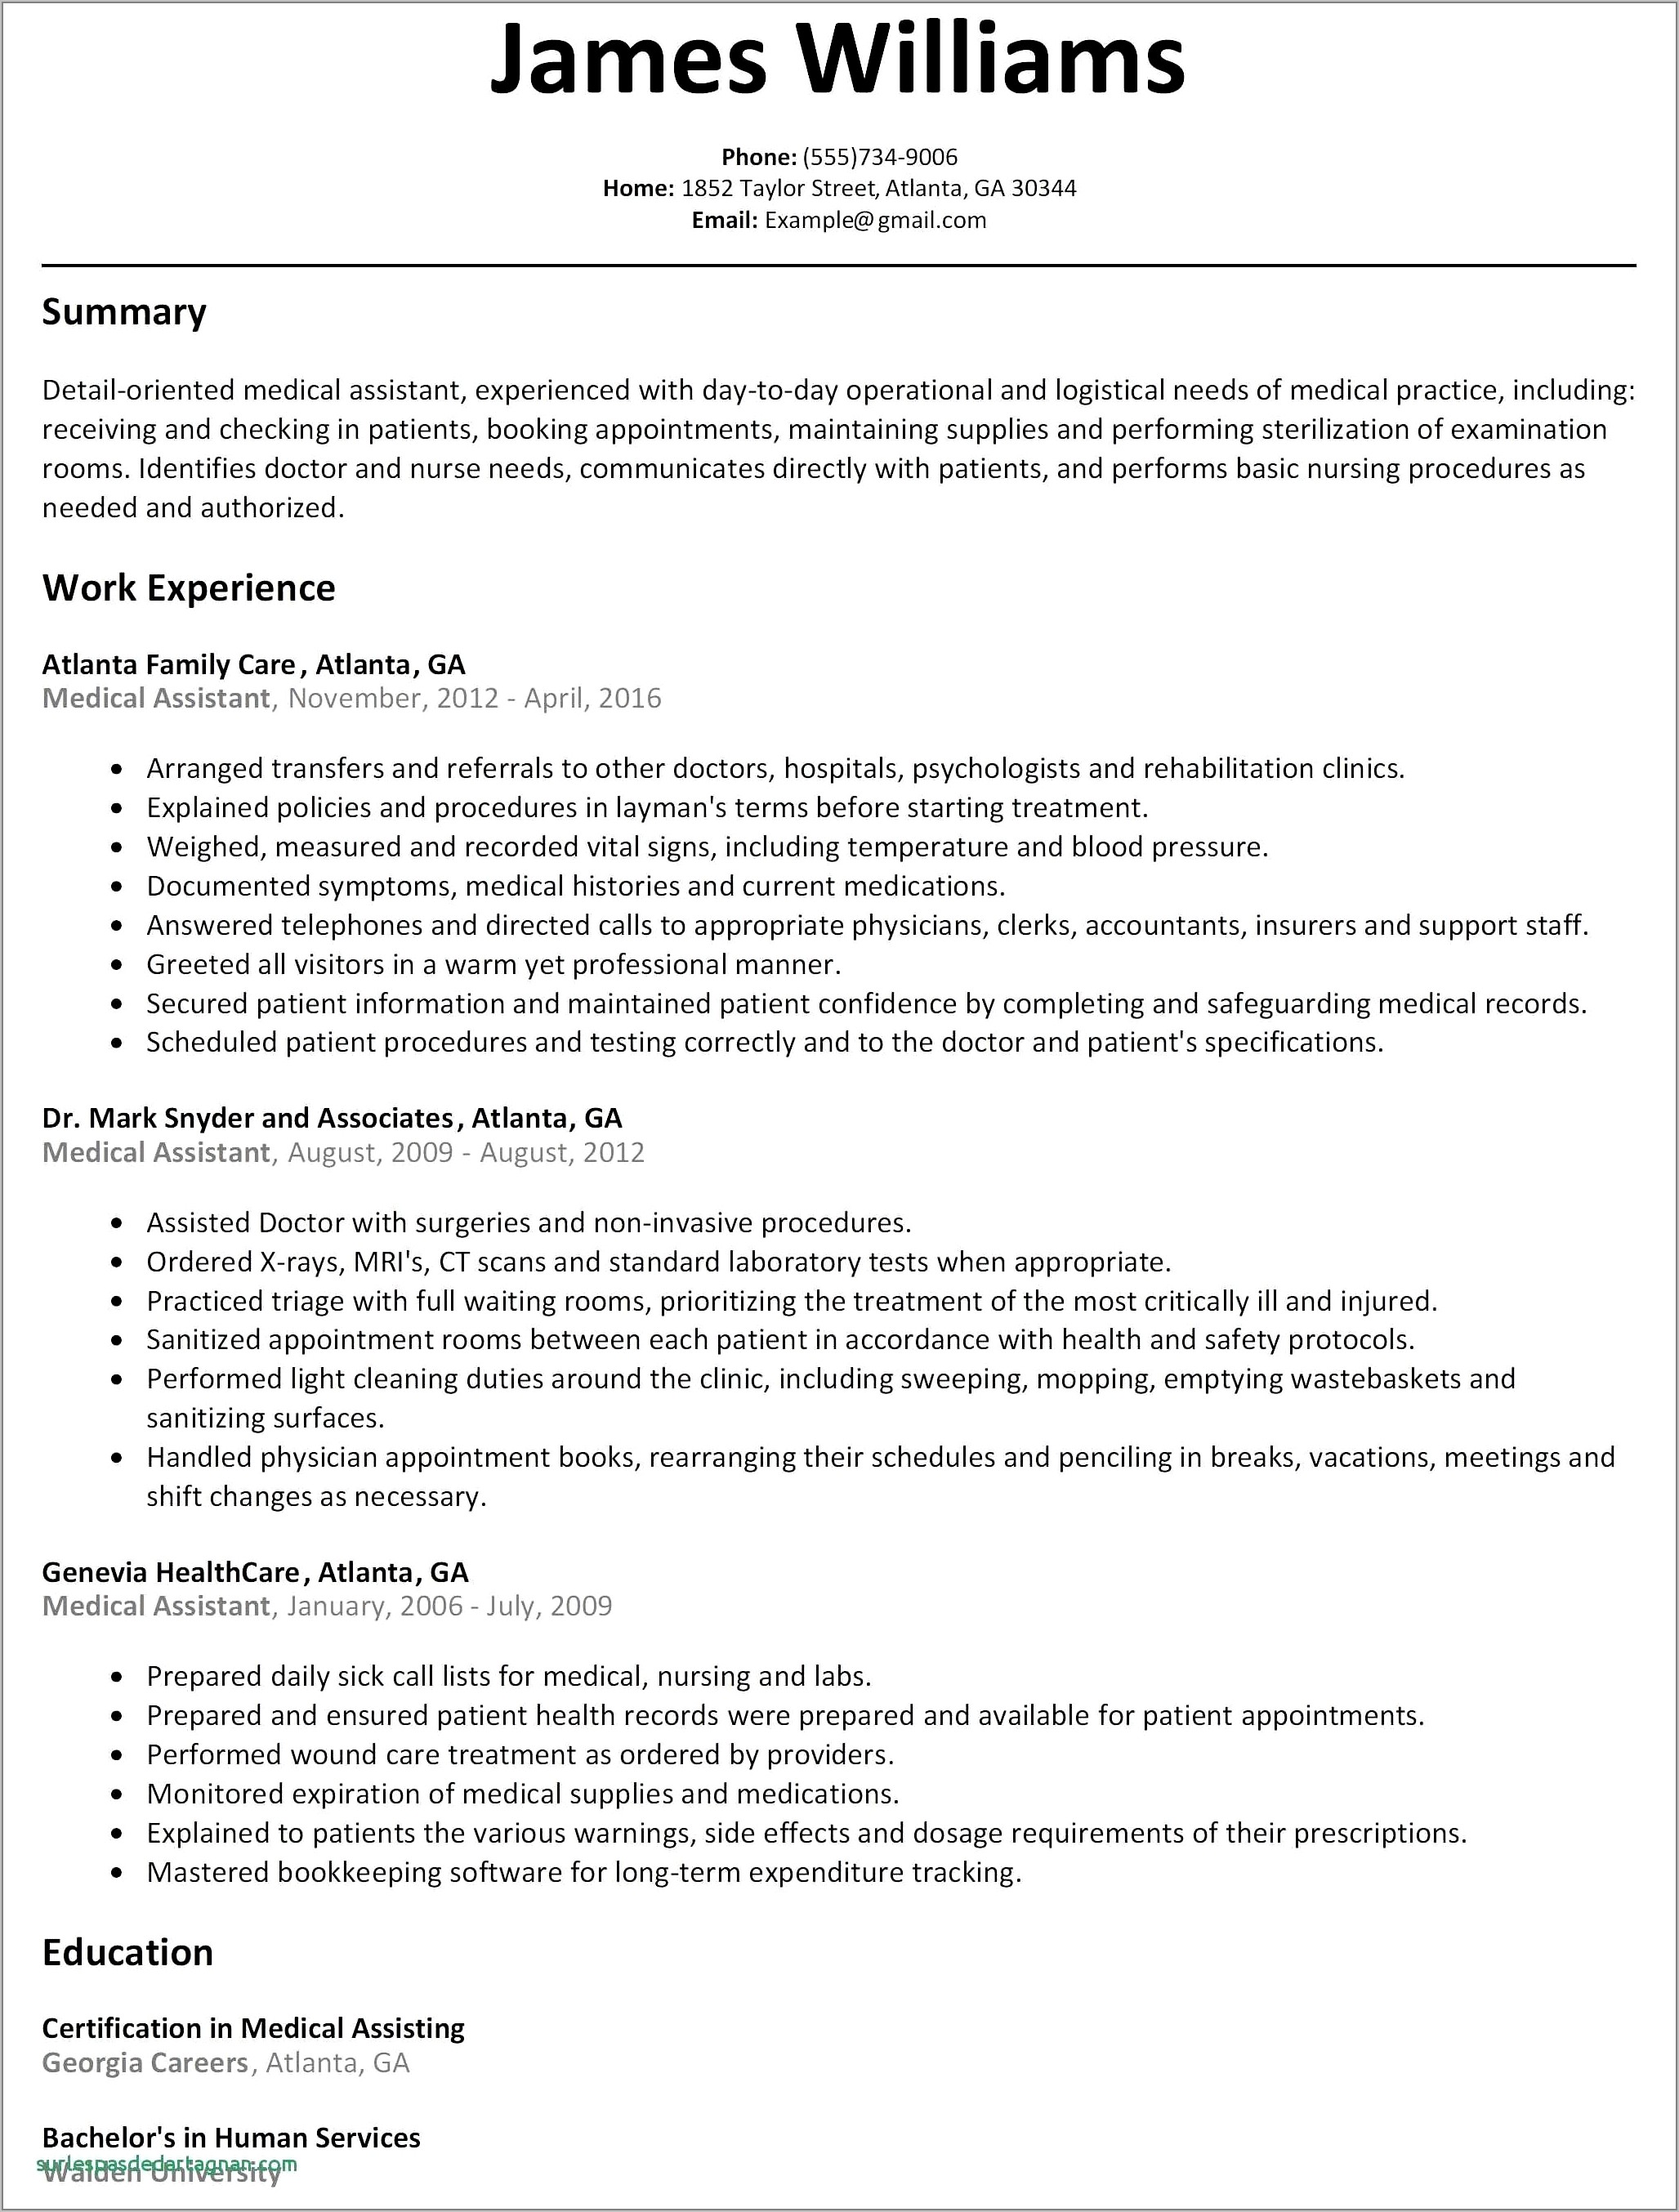 Free Resume Template To Print